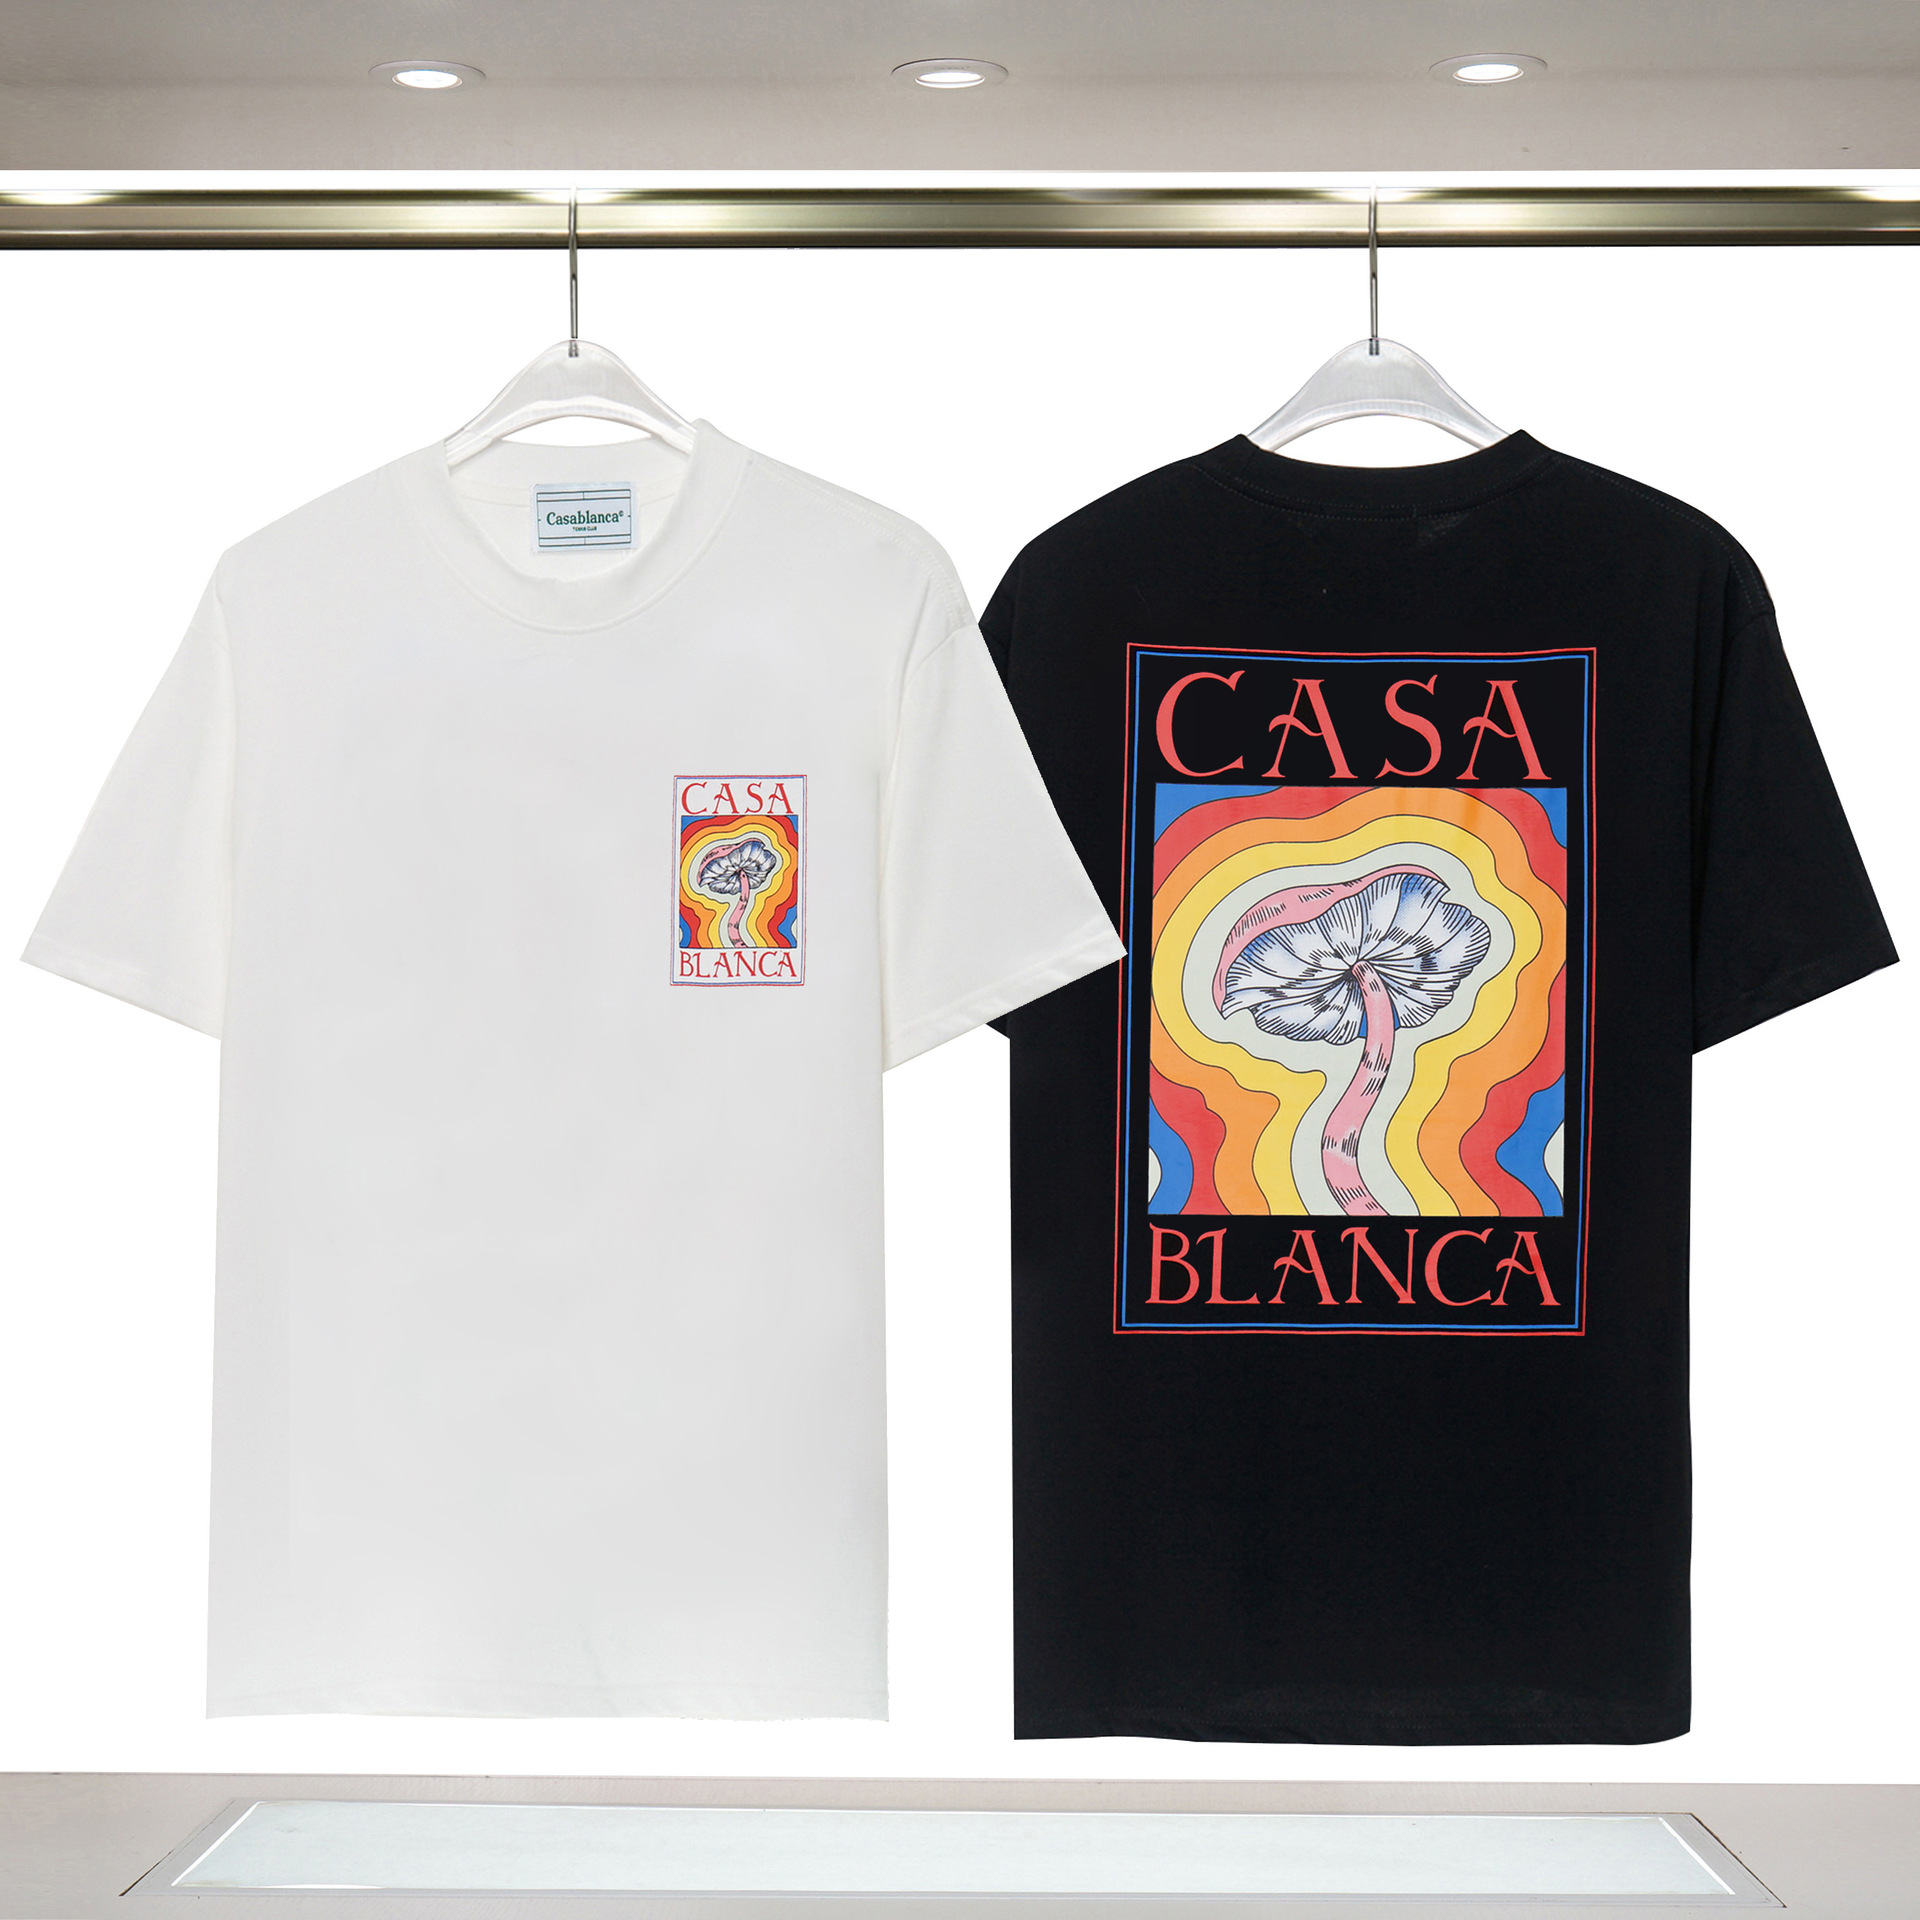 Homens camisetas gráficas Casablanca Camiseta Mens Designer Camiseta Casual Solta Mangas Curtas Tee Clube de Tênis Streetwear Camiseta Mulheres Mens Roupas Tamanho S-3XL